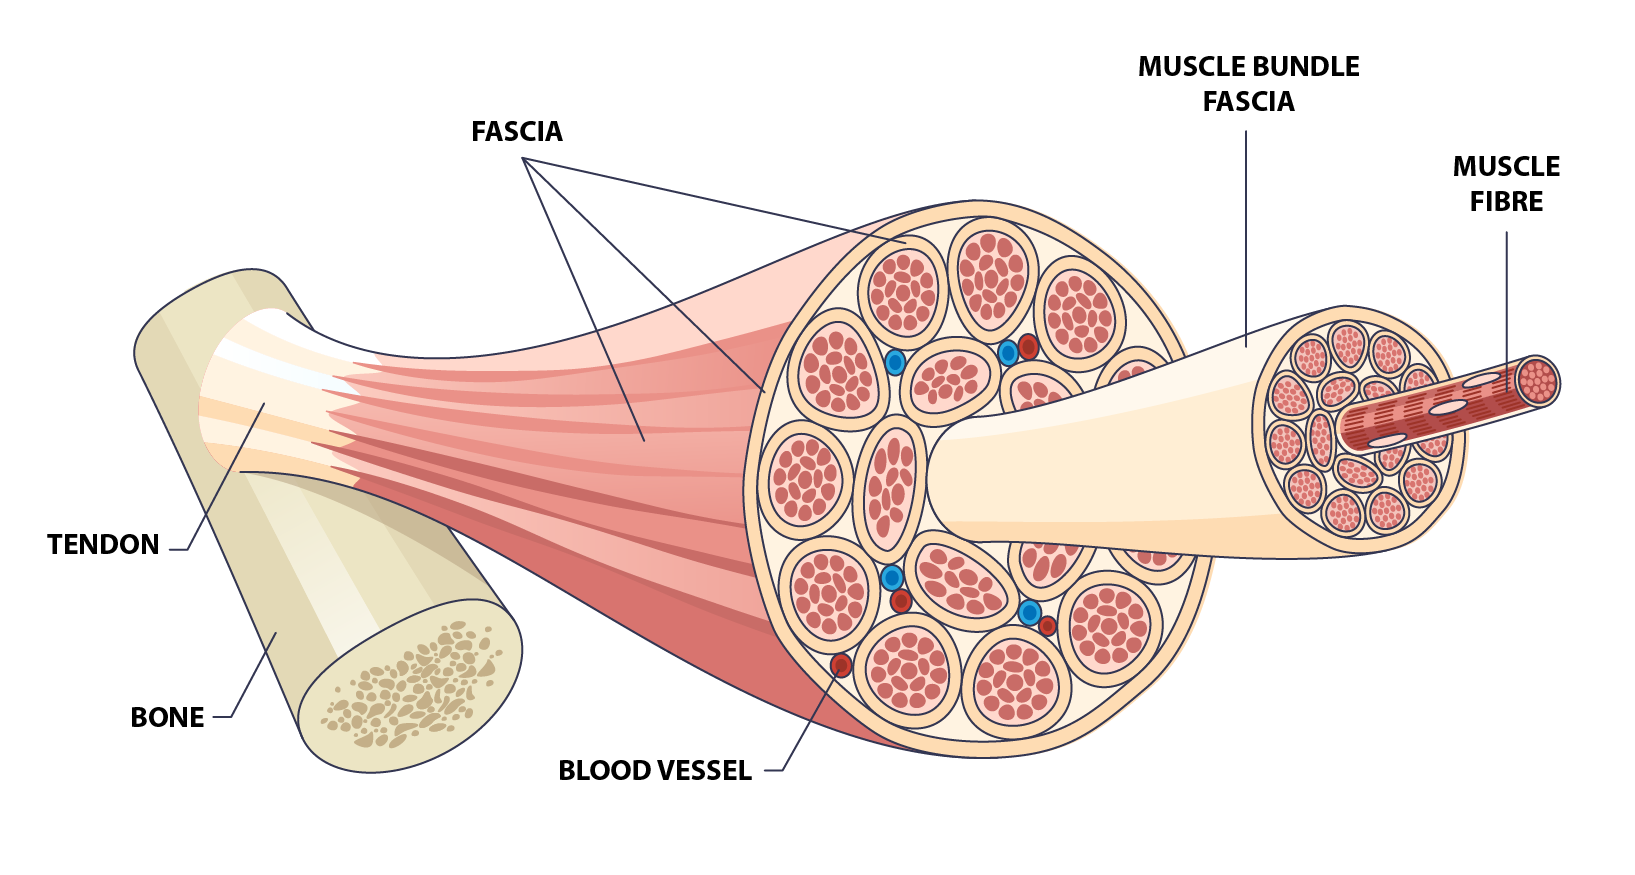 layers of fascia surrounding muscle fibers